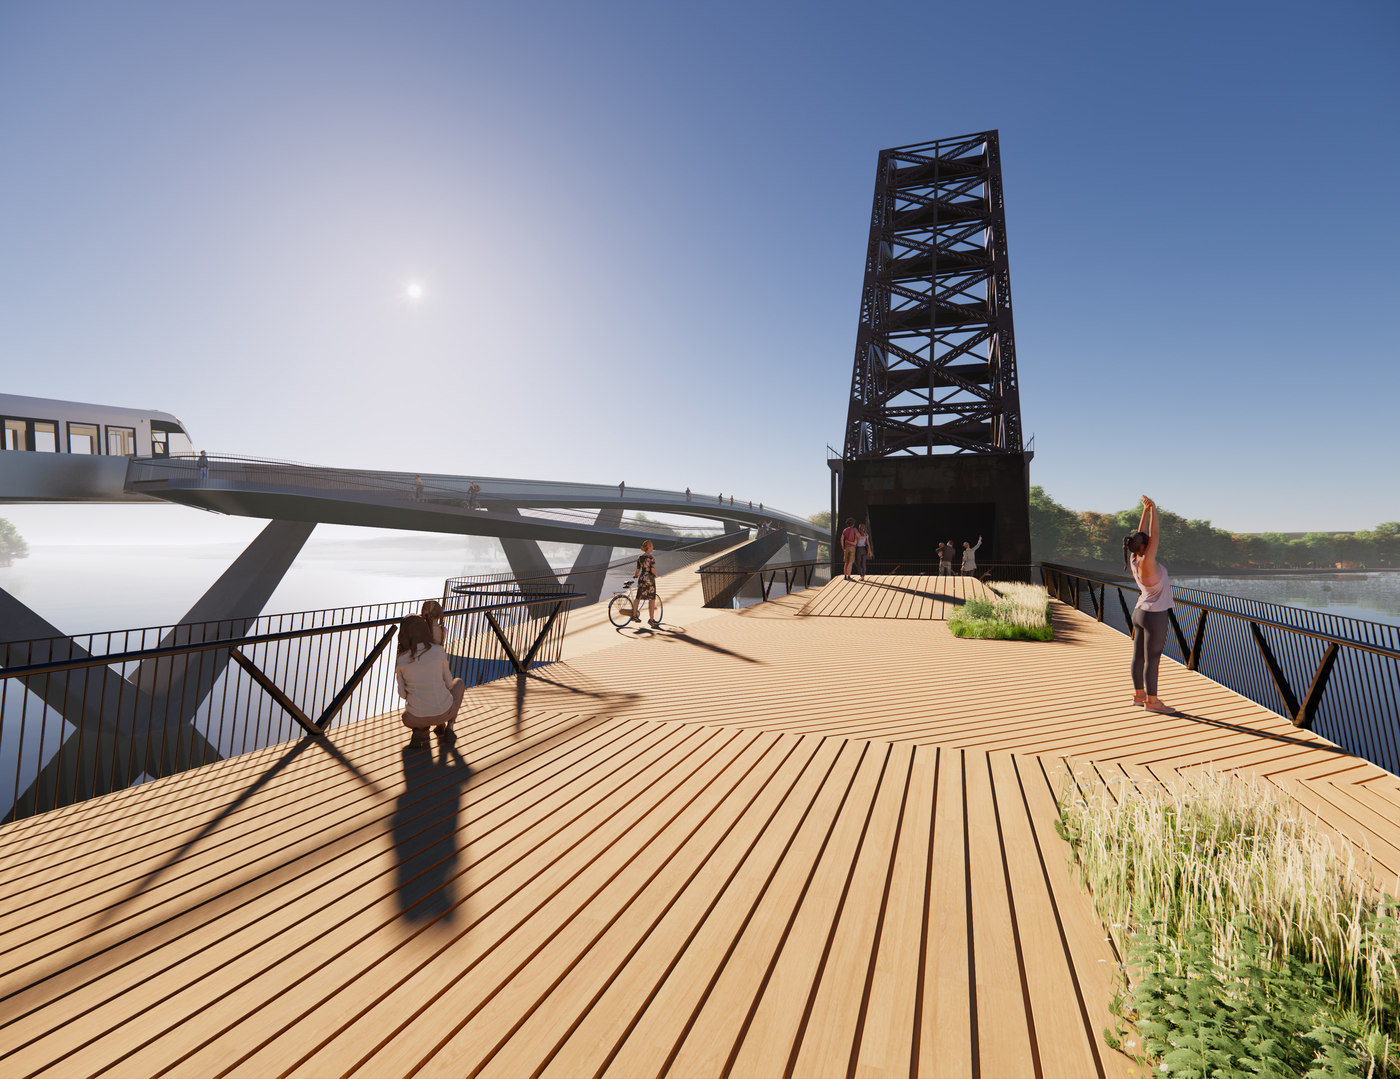 9 tskp unbuilt stuckbridge park providence aiact rendering 1400 0x0x3894x3000 q85